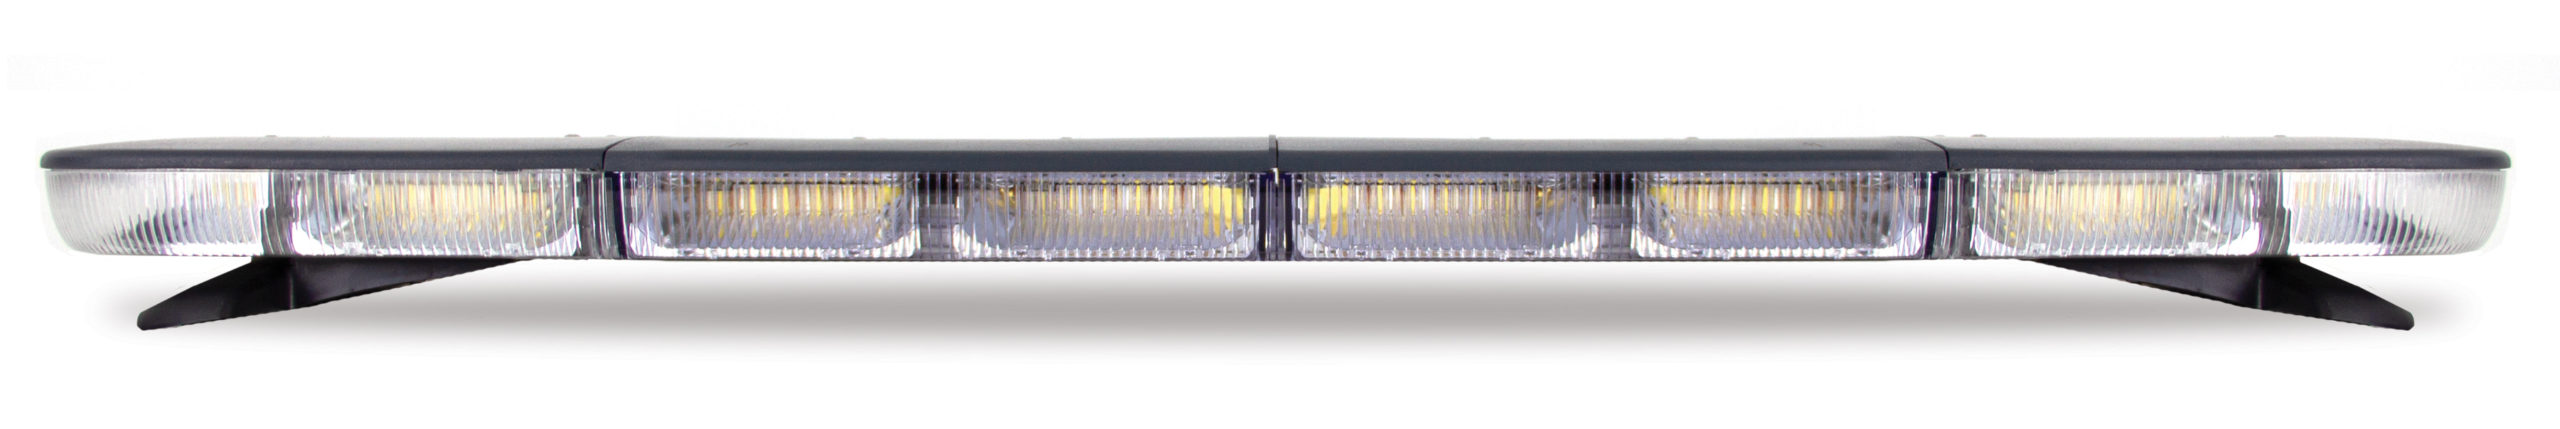 nFORCE® NXT Lightbar Product Image